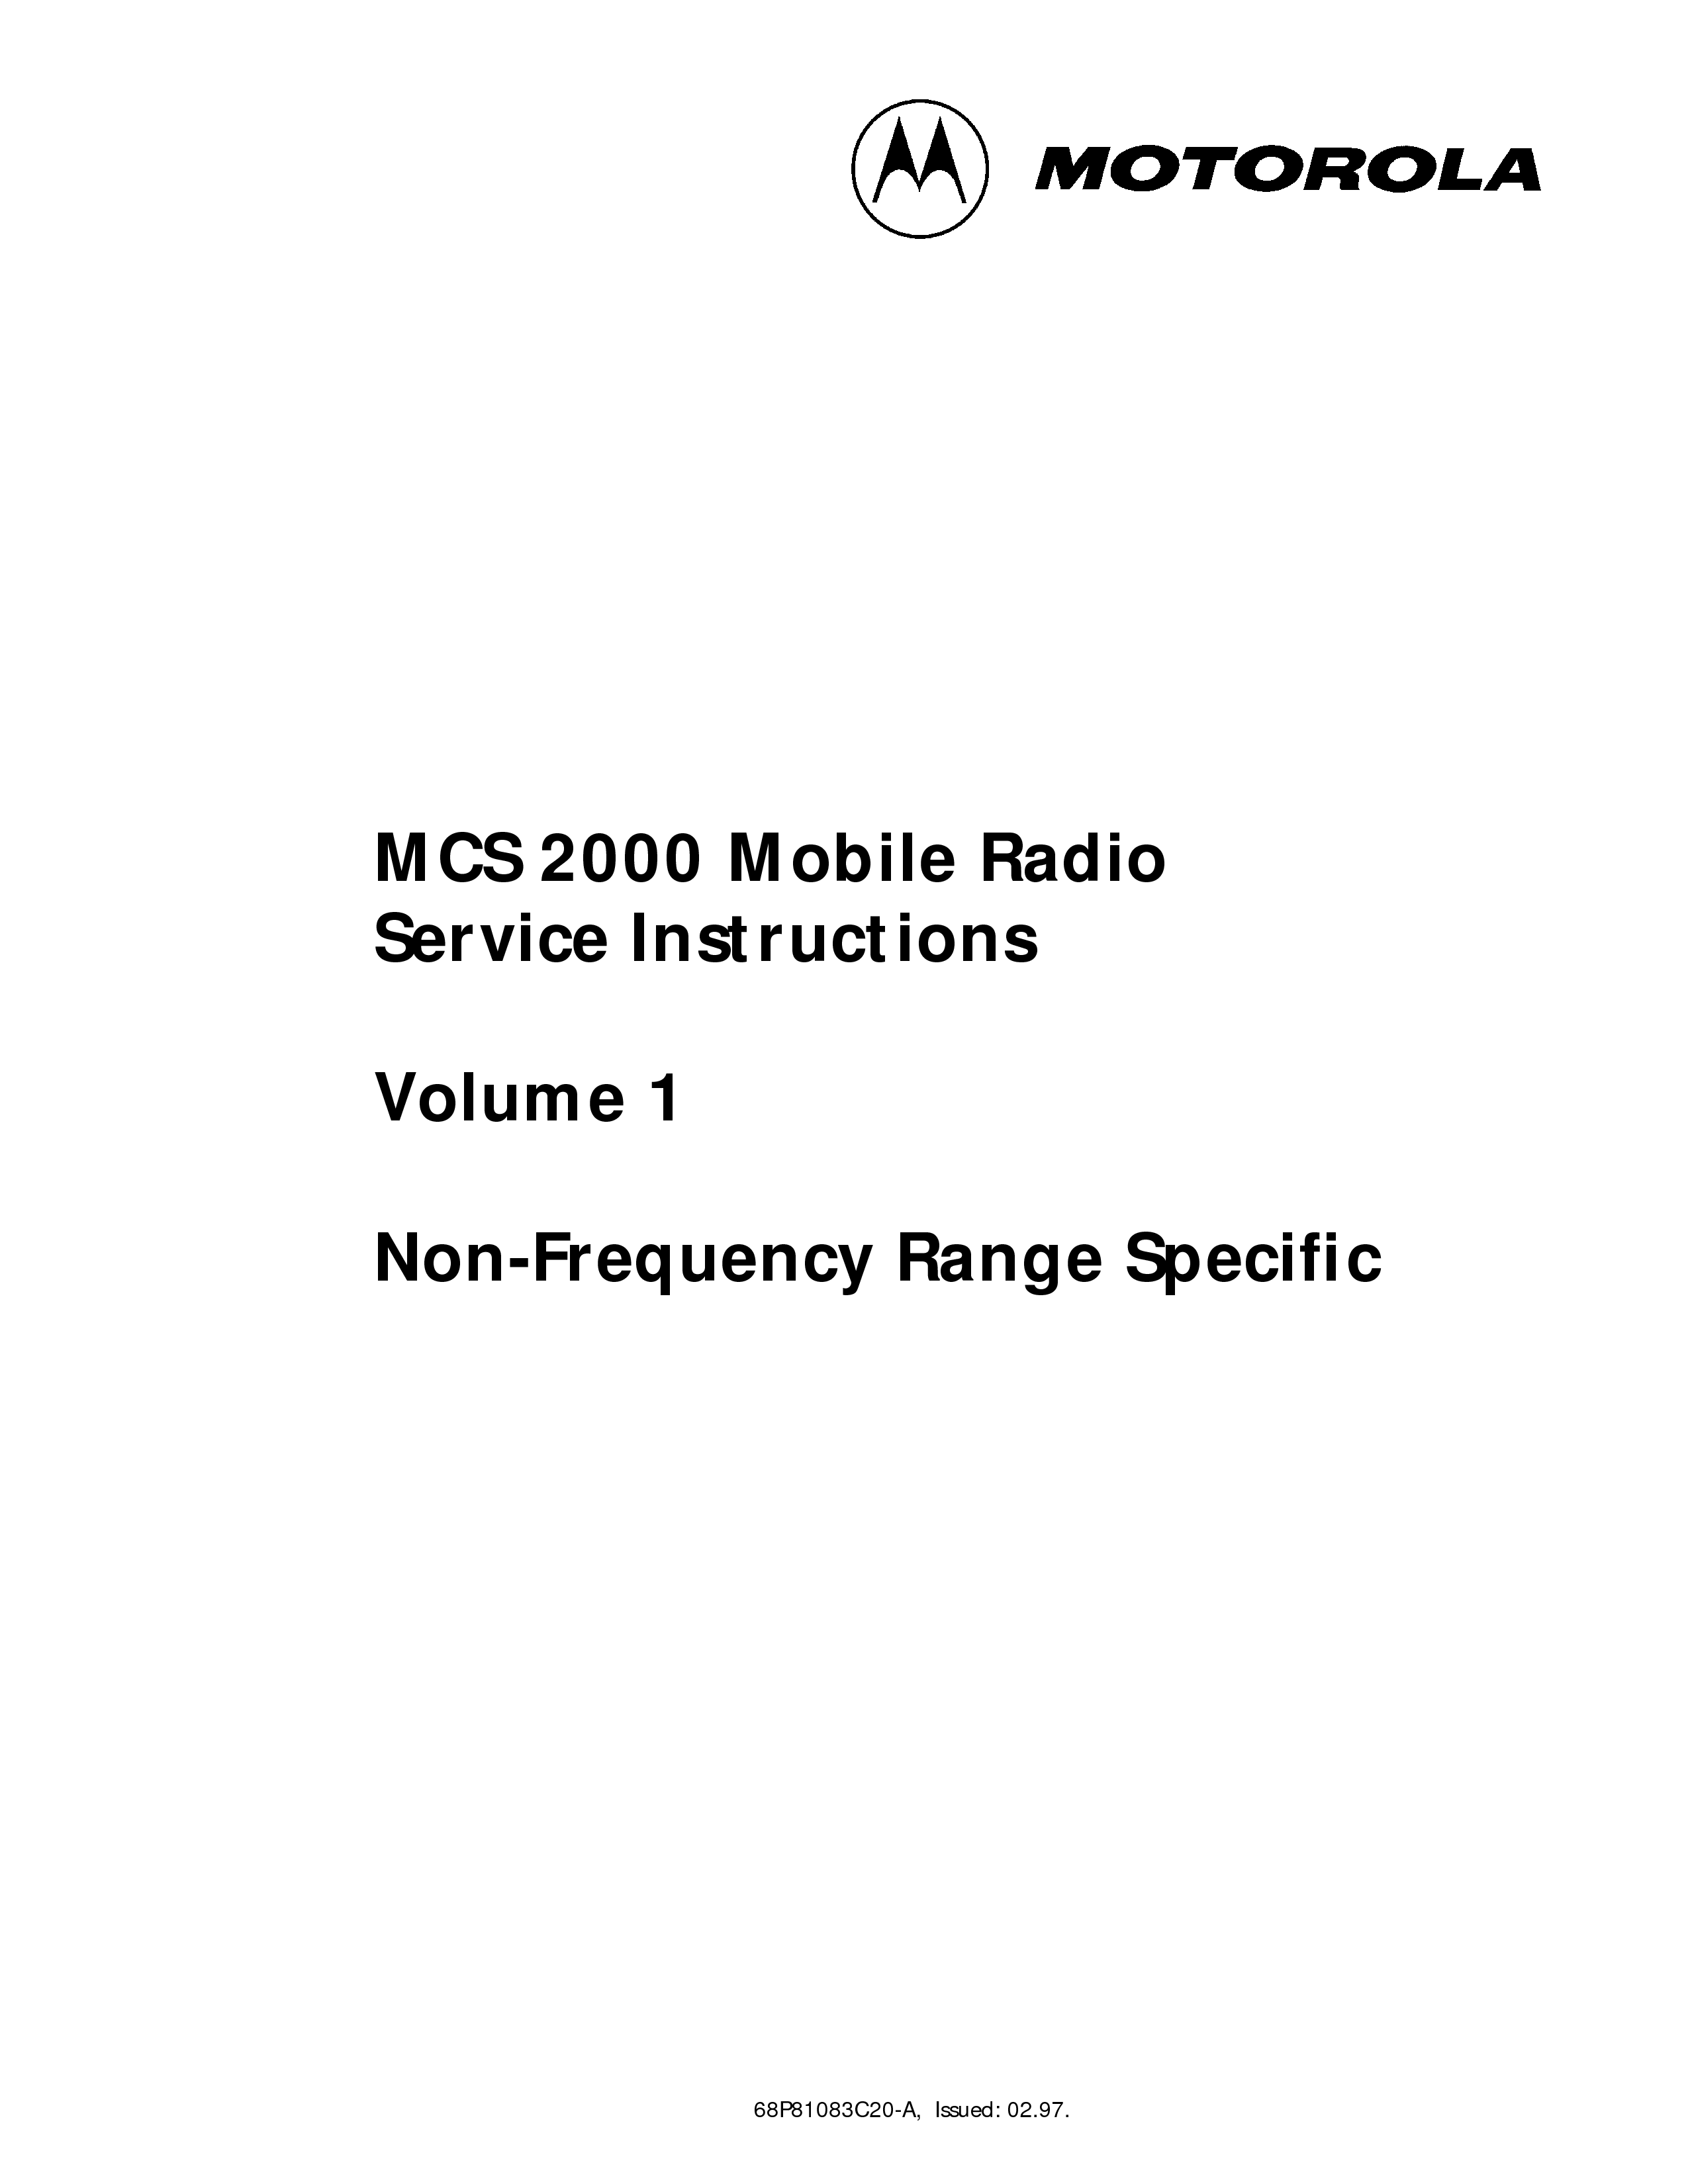 programming software for the motorola mcs2000 vhf radio